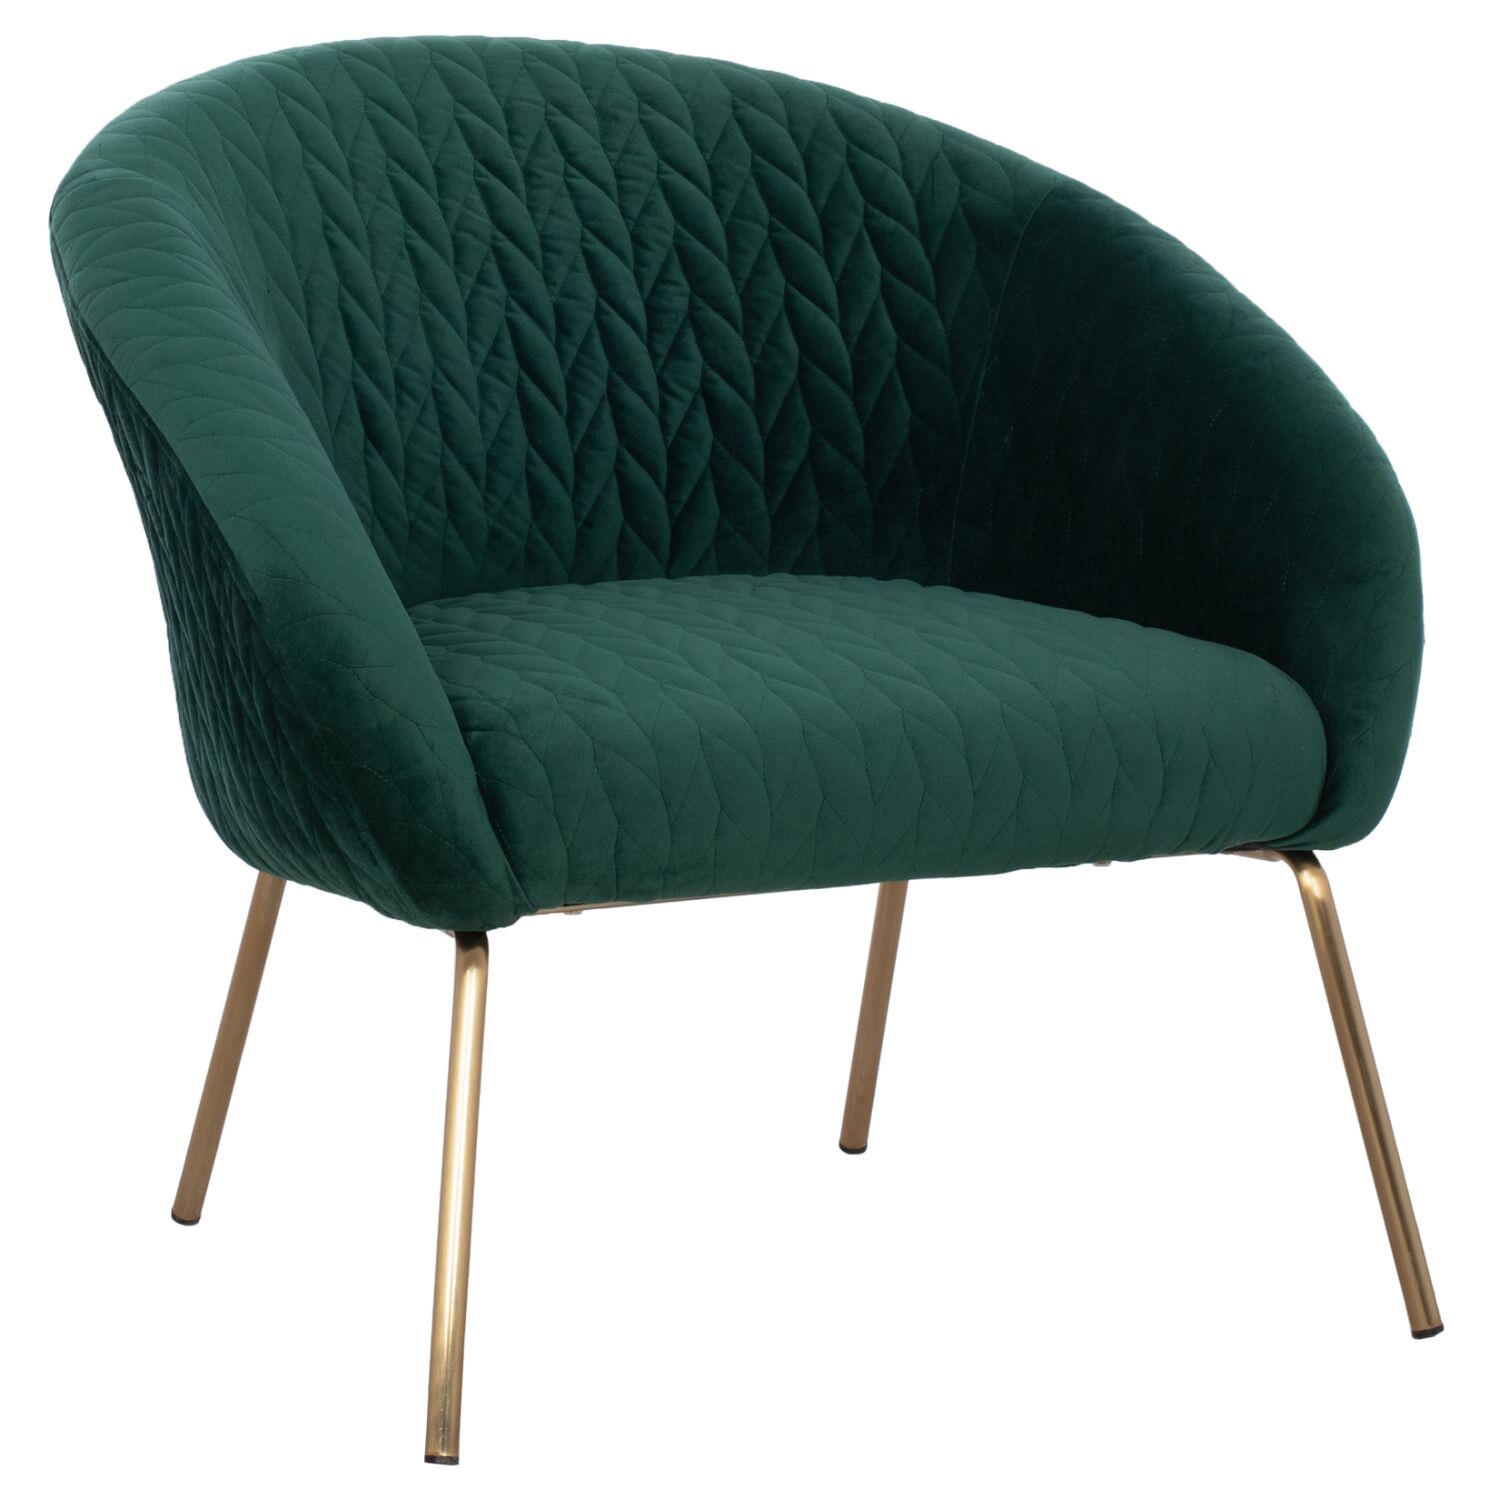 HM8549.03 armchair JOYCE, cypress green velvet, metallic legs